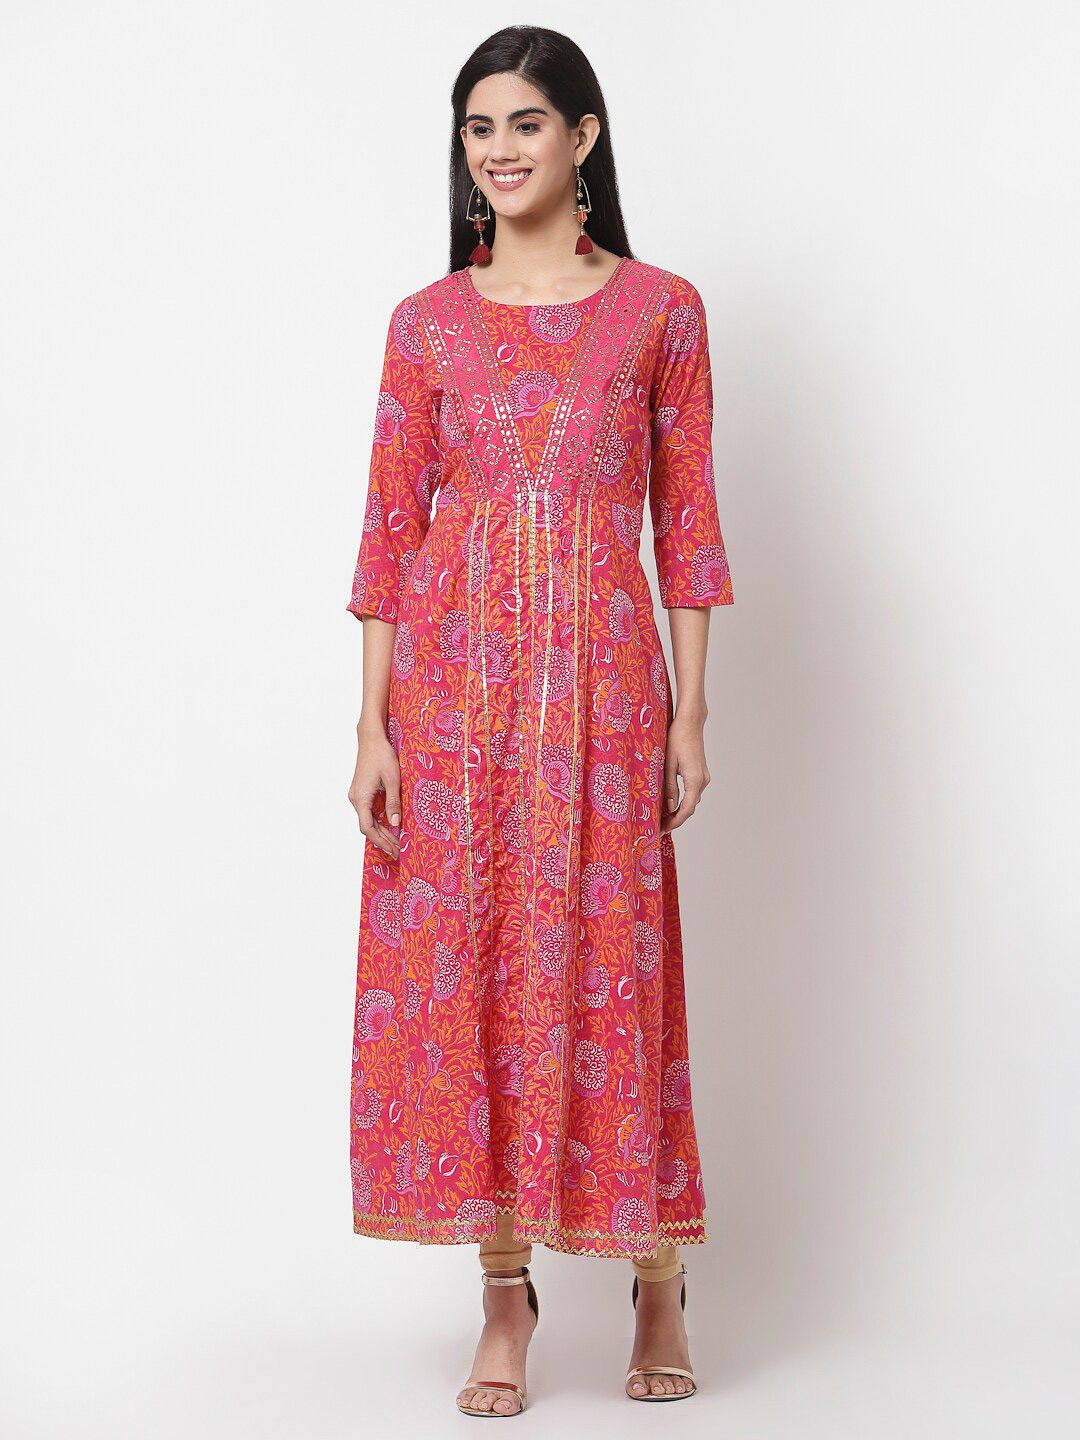 Myshka Red & Orange Floral Ethnic Pure Cotton Maxi Dress Price in India